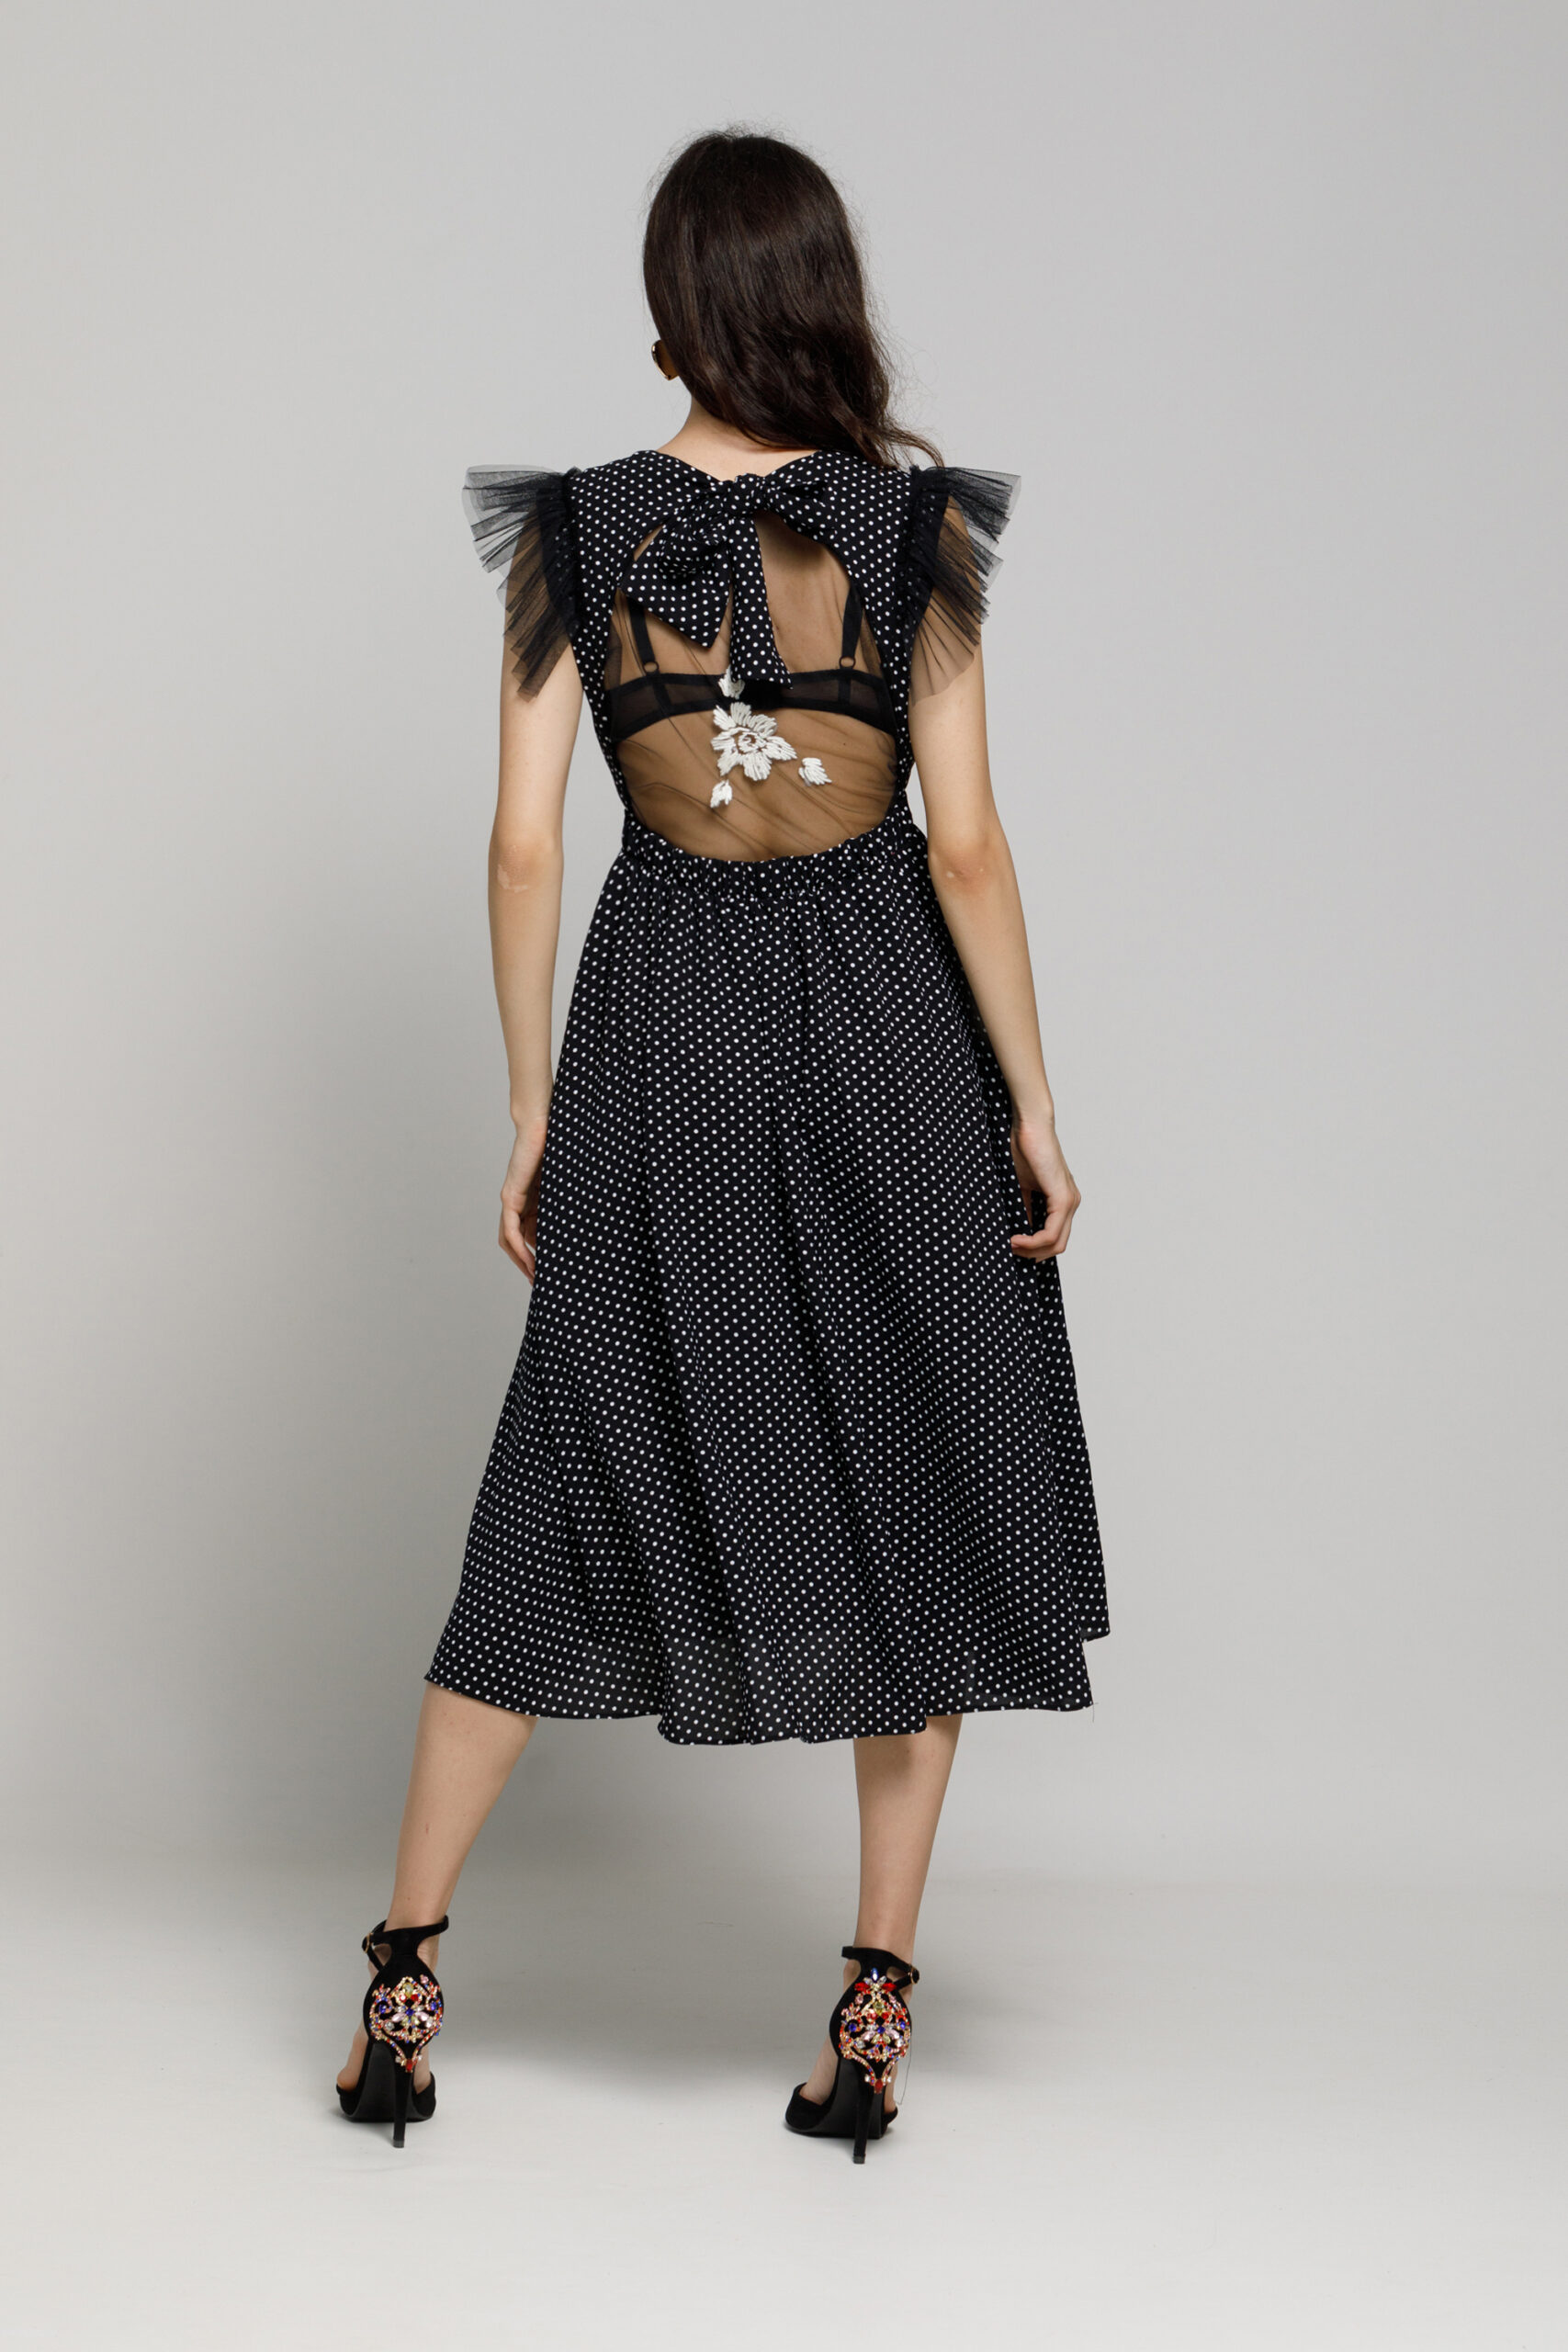 ABRA dress in black viscose with white polka dots. Natural fabrics, original design, handmade embroidery